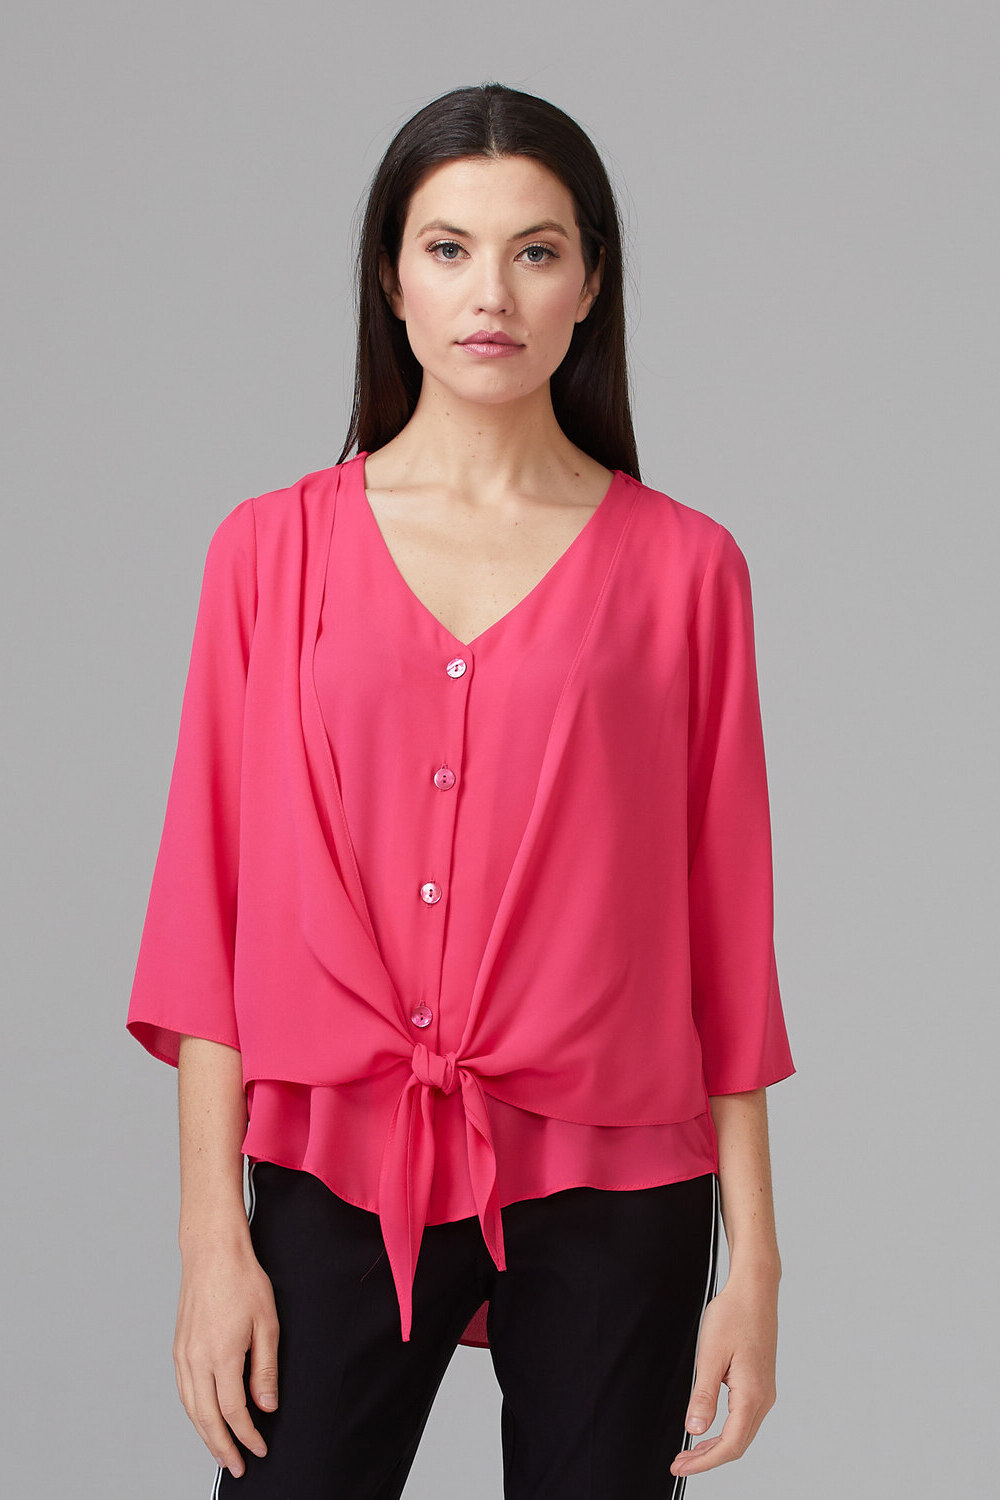 Joseph Ribkoff Shirt style 201336. Hyper Pink